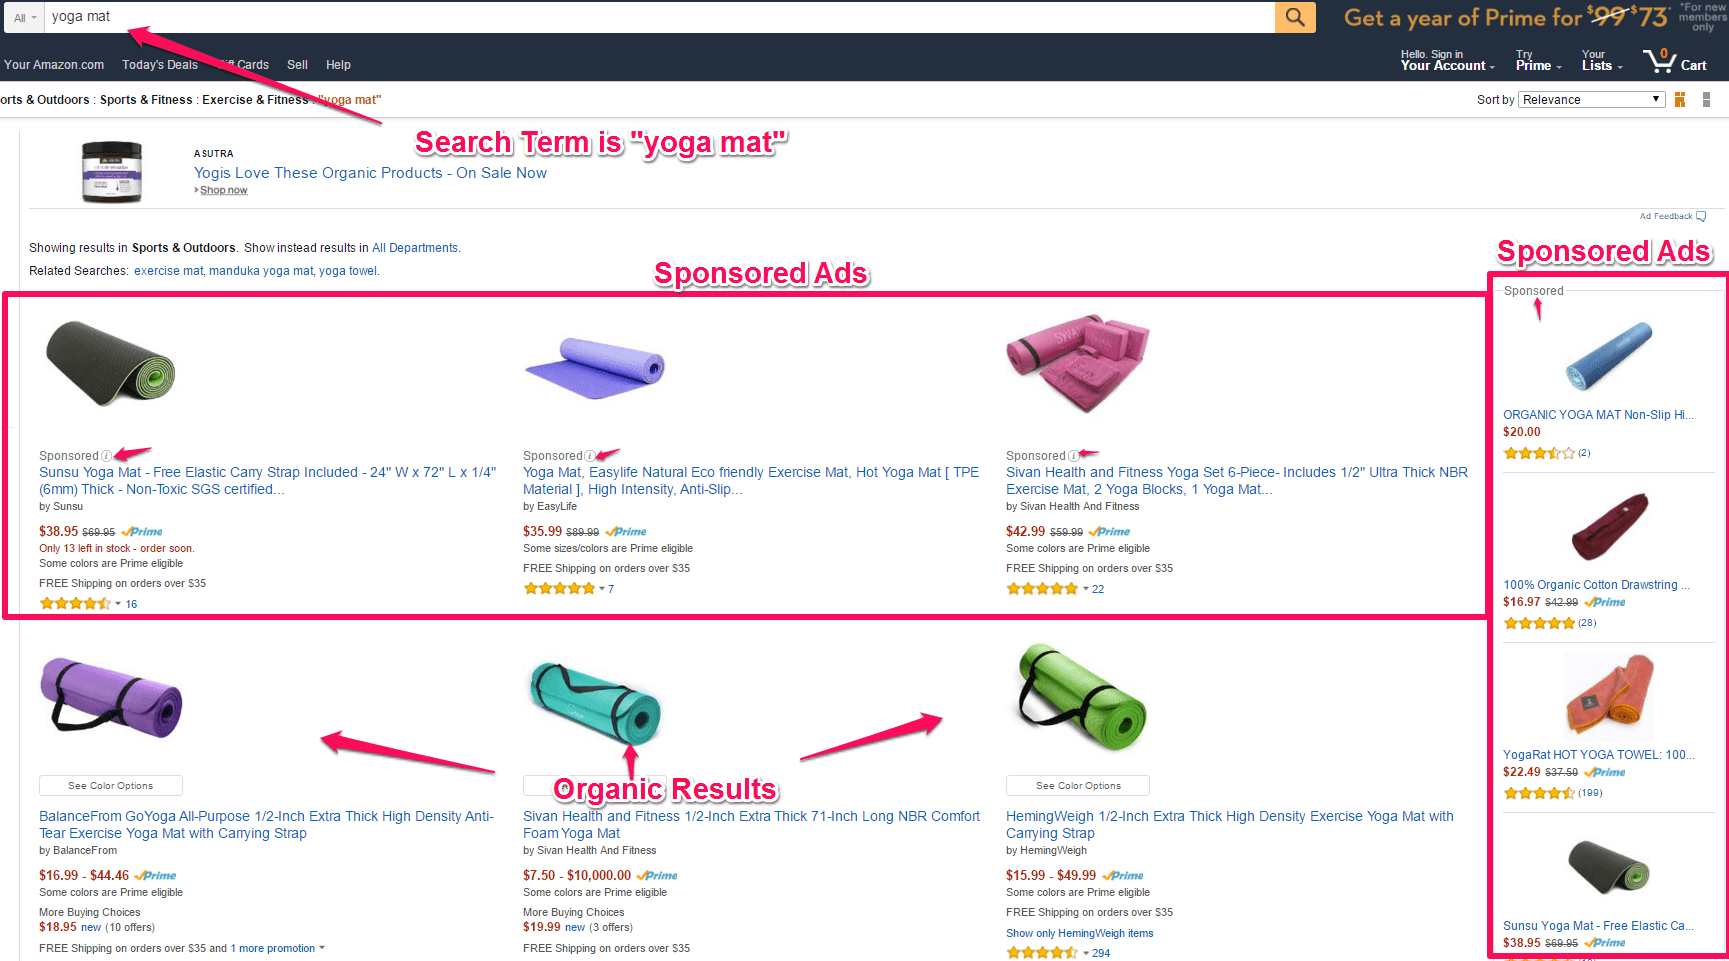 Where Do Amazon PPC Ads Appear?